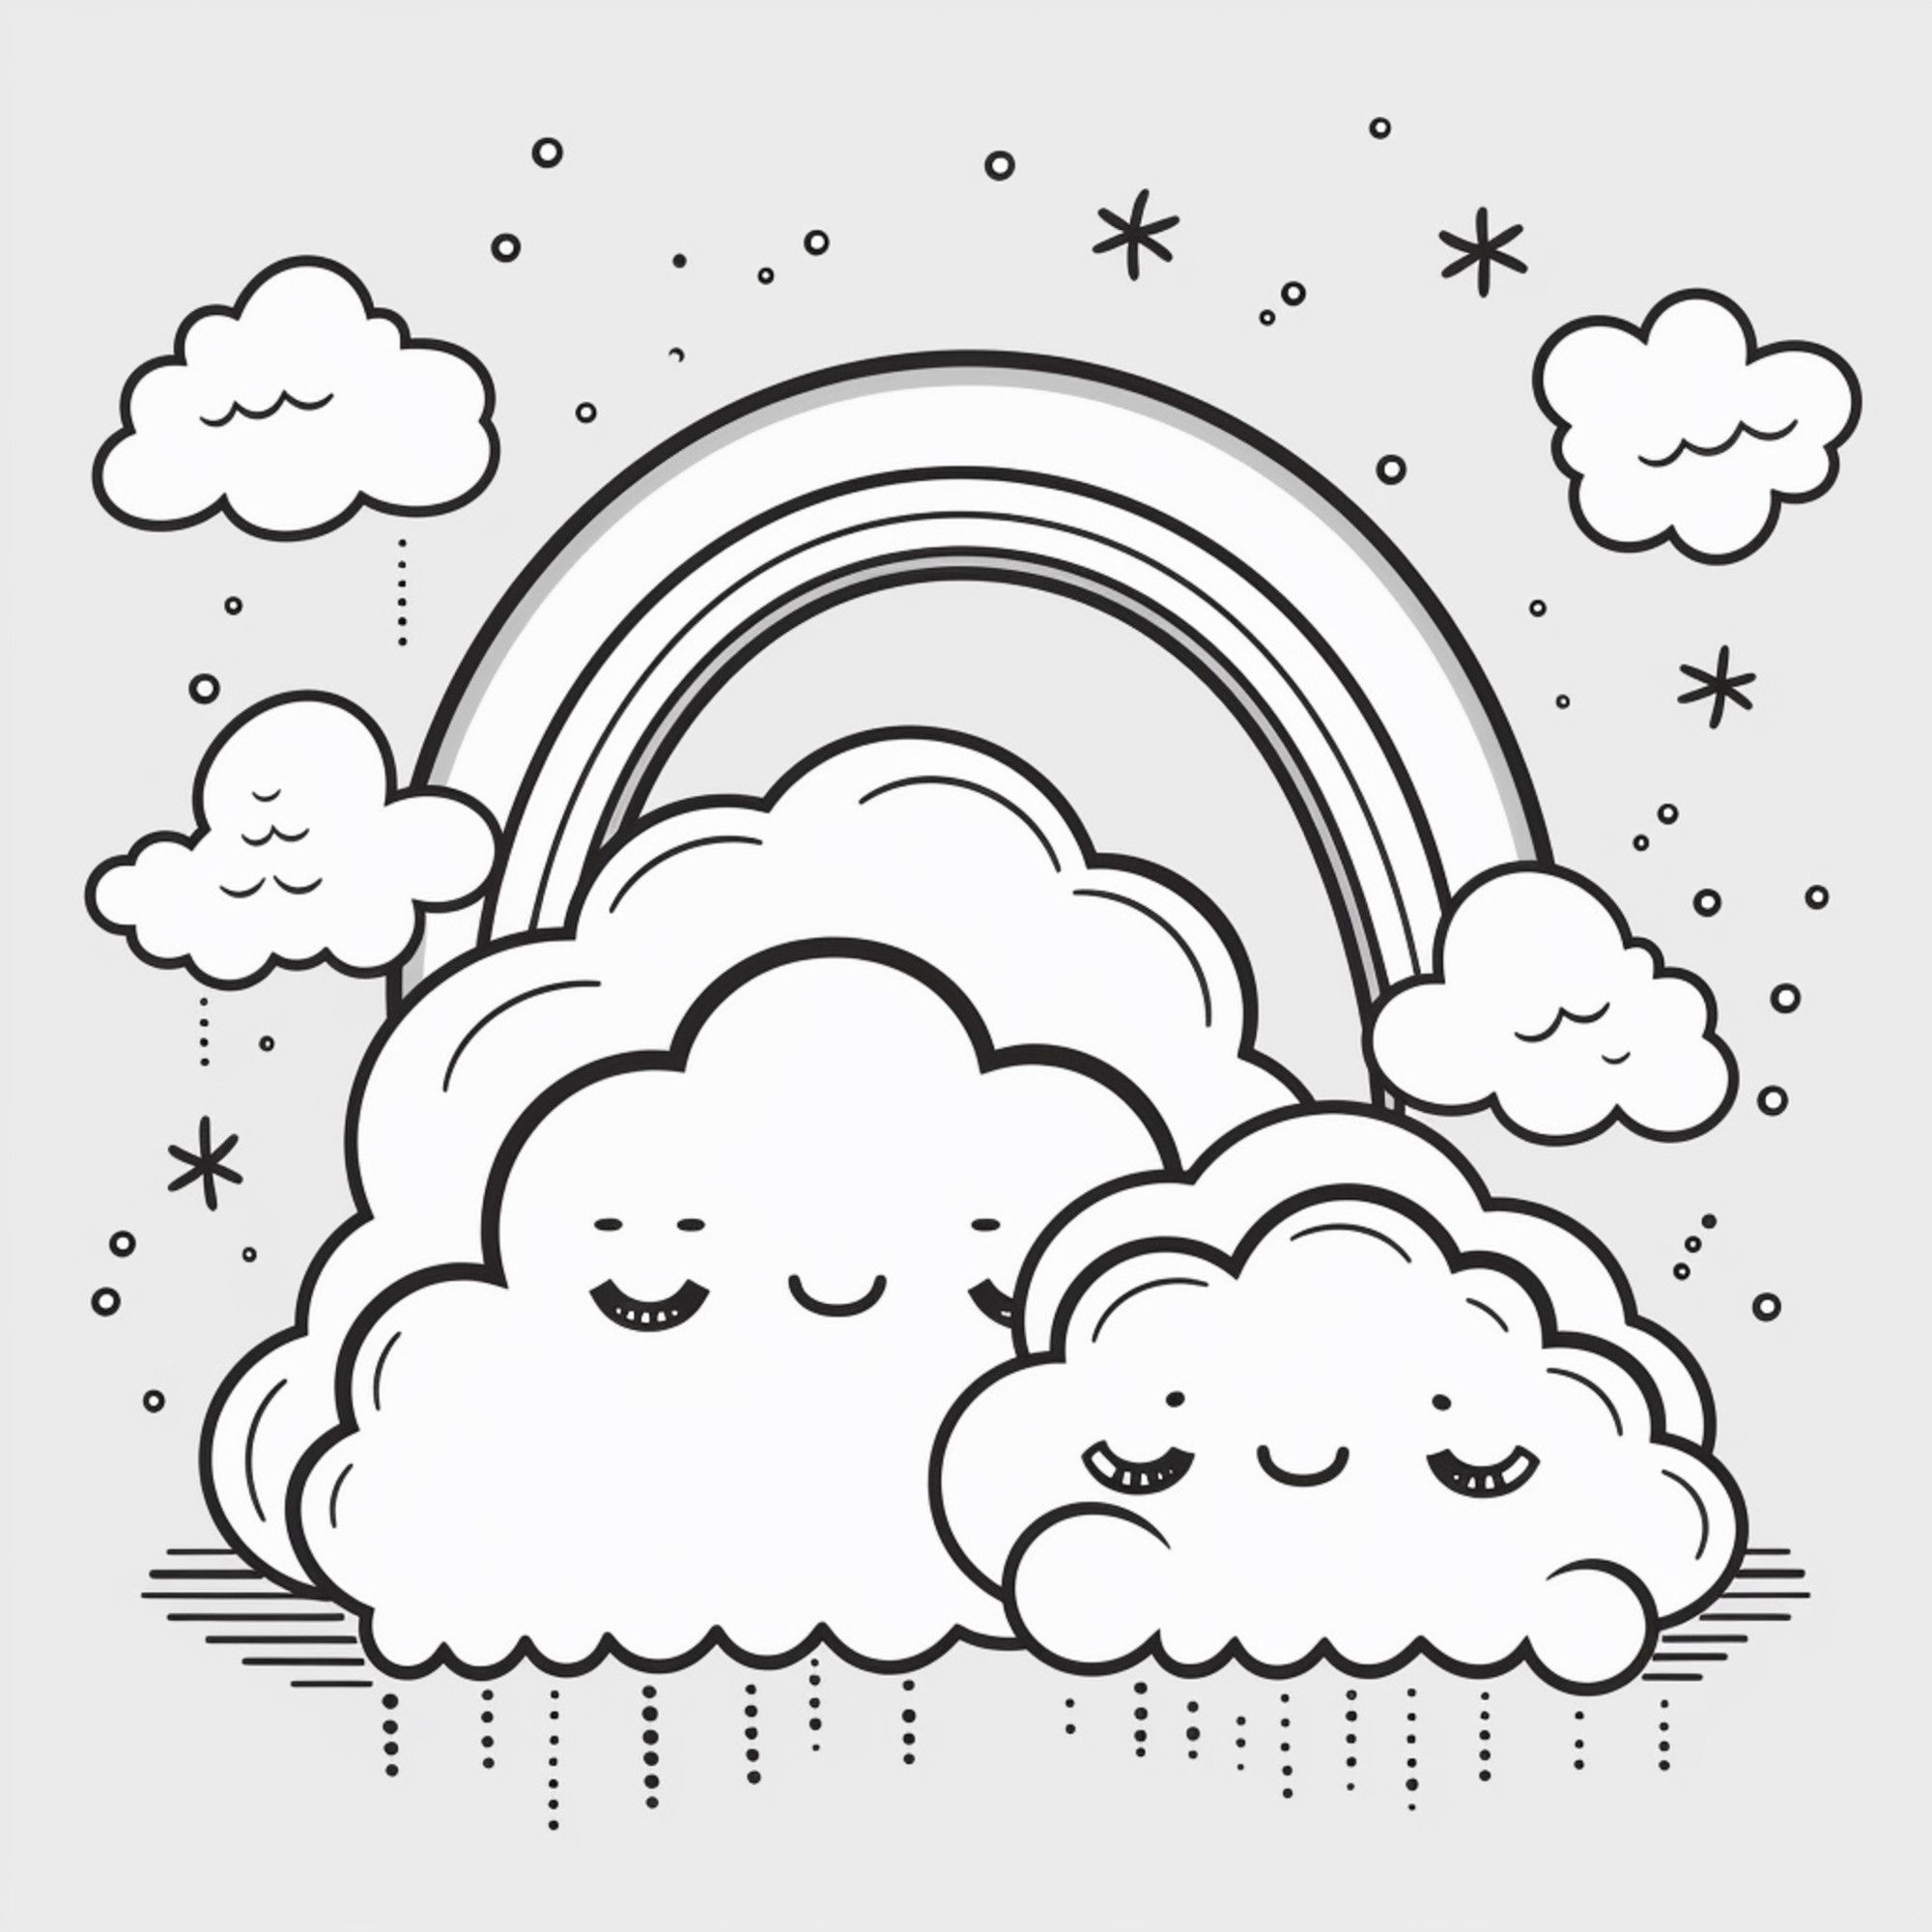 Раскраска для детей: два облачка на фоне радуги